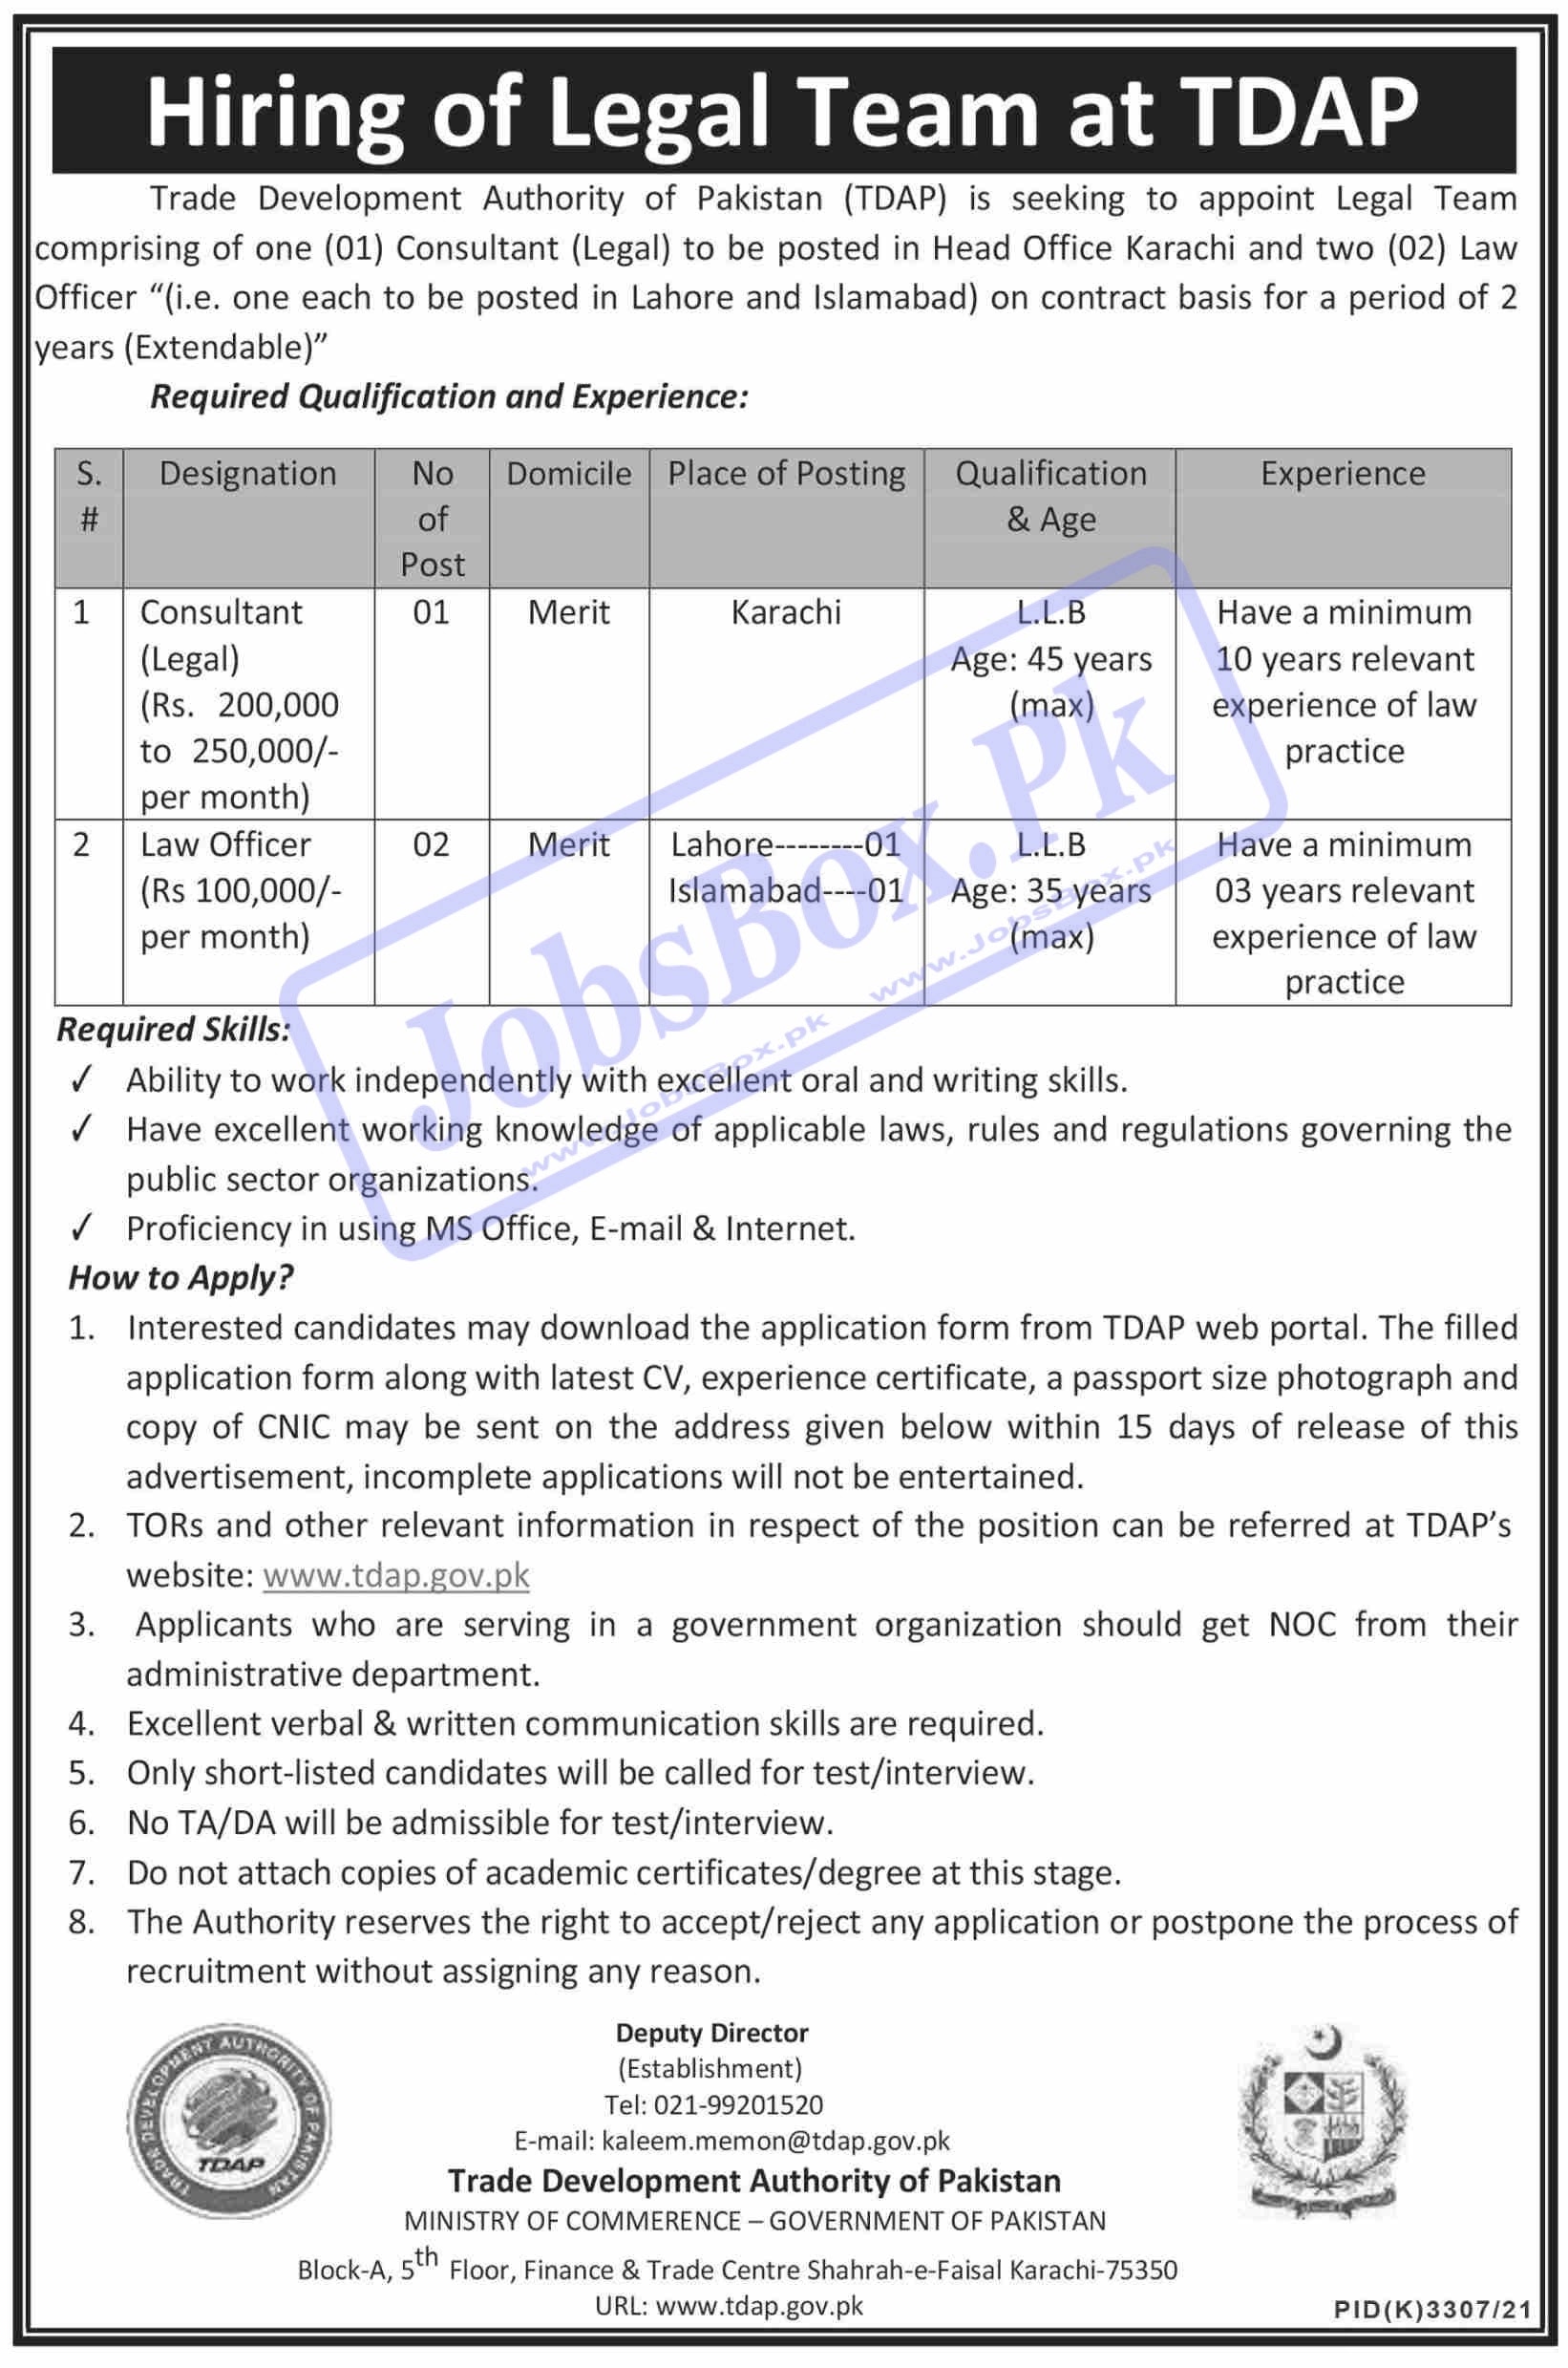 TDAP Jobs 2022 - www.tdap.gov.pk Jobs 2022 - Trade Development Authority of Pakistan Jobs 2022